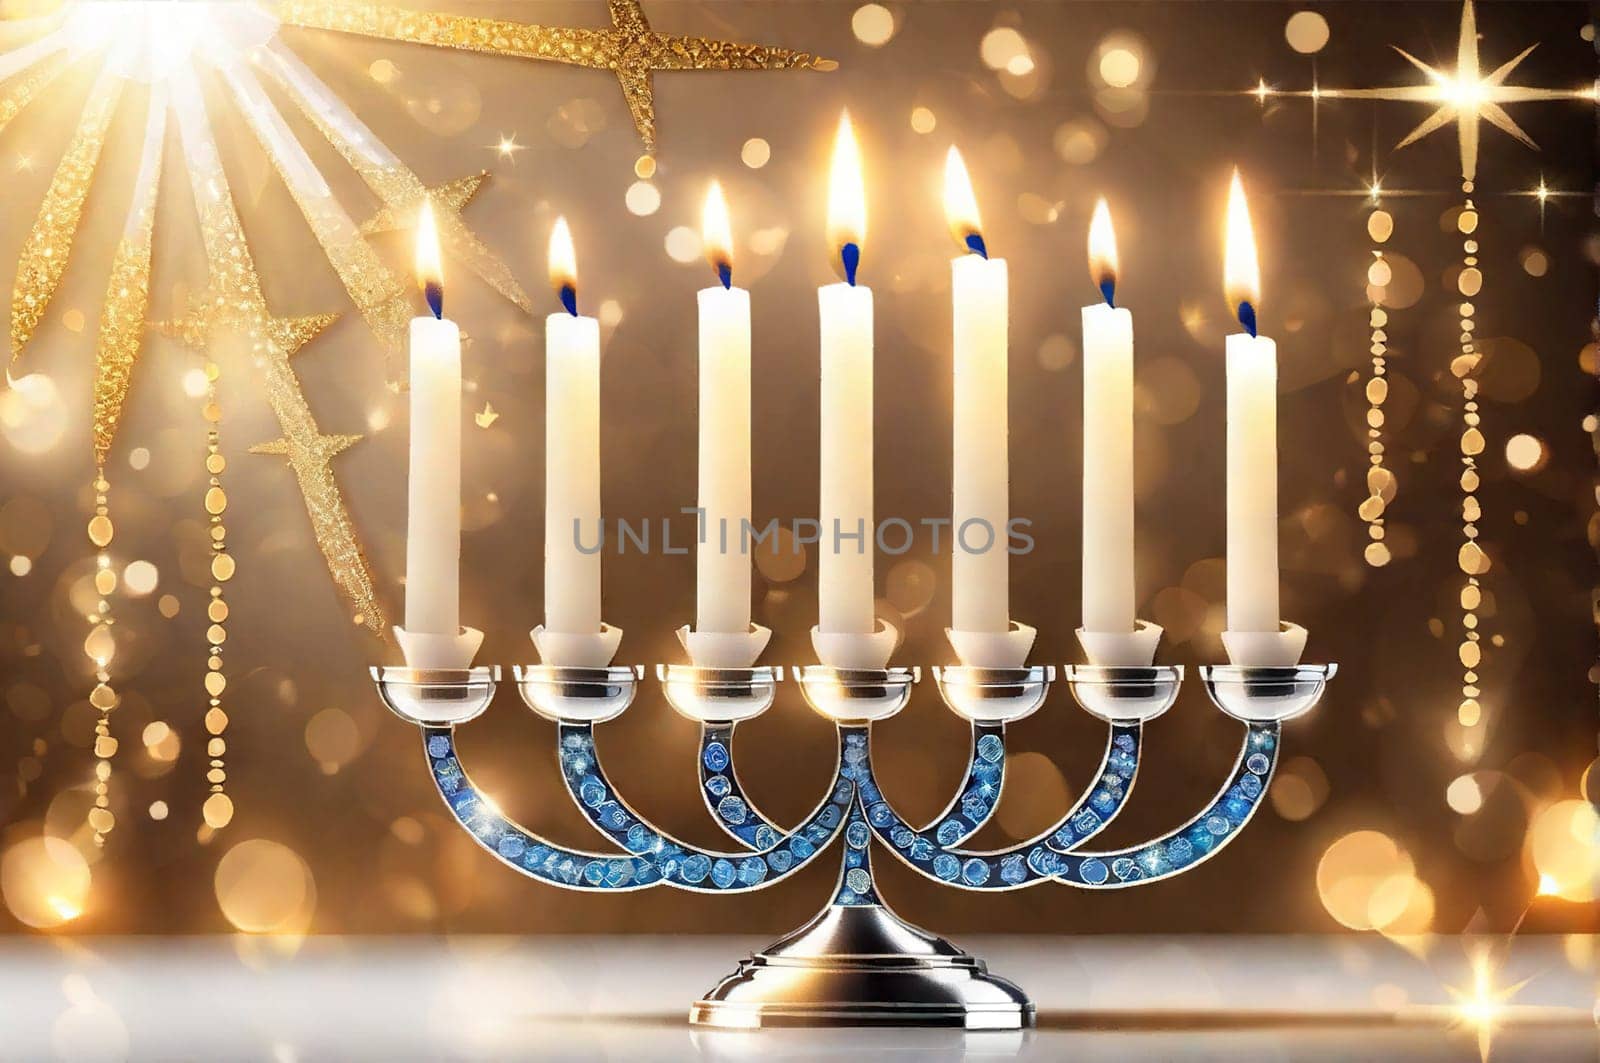 Happy Hanukkah card with beautiful and creative symbols on colorful holiday by EkaterinaPereslavtseva